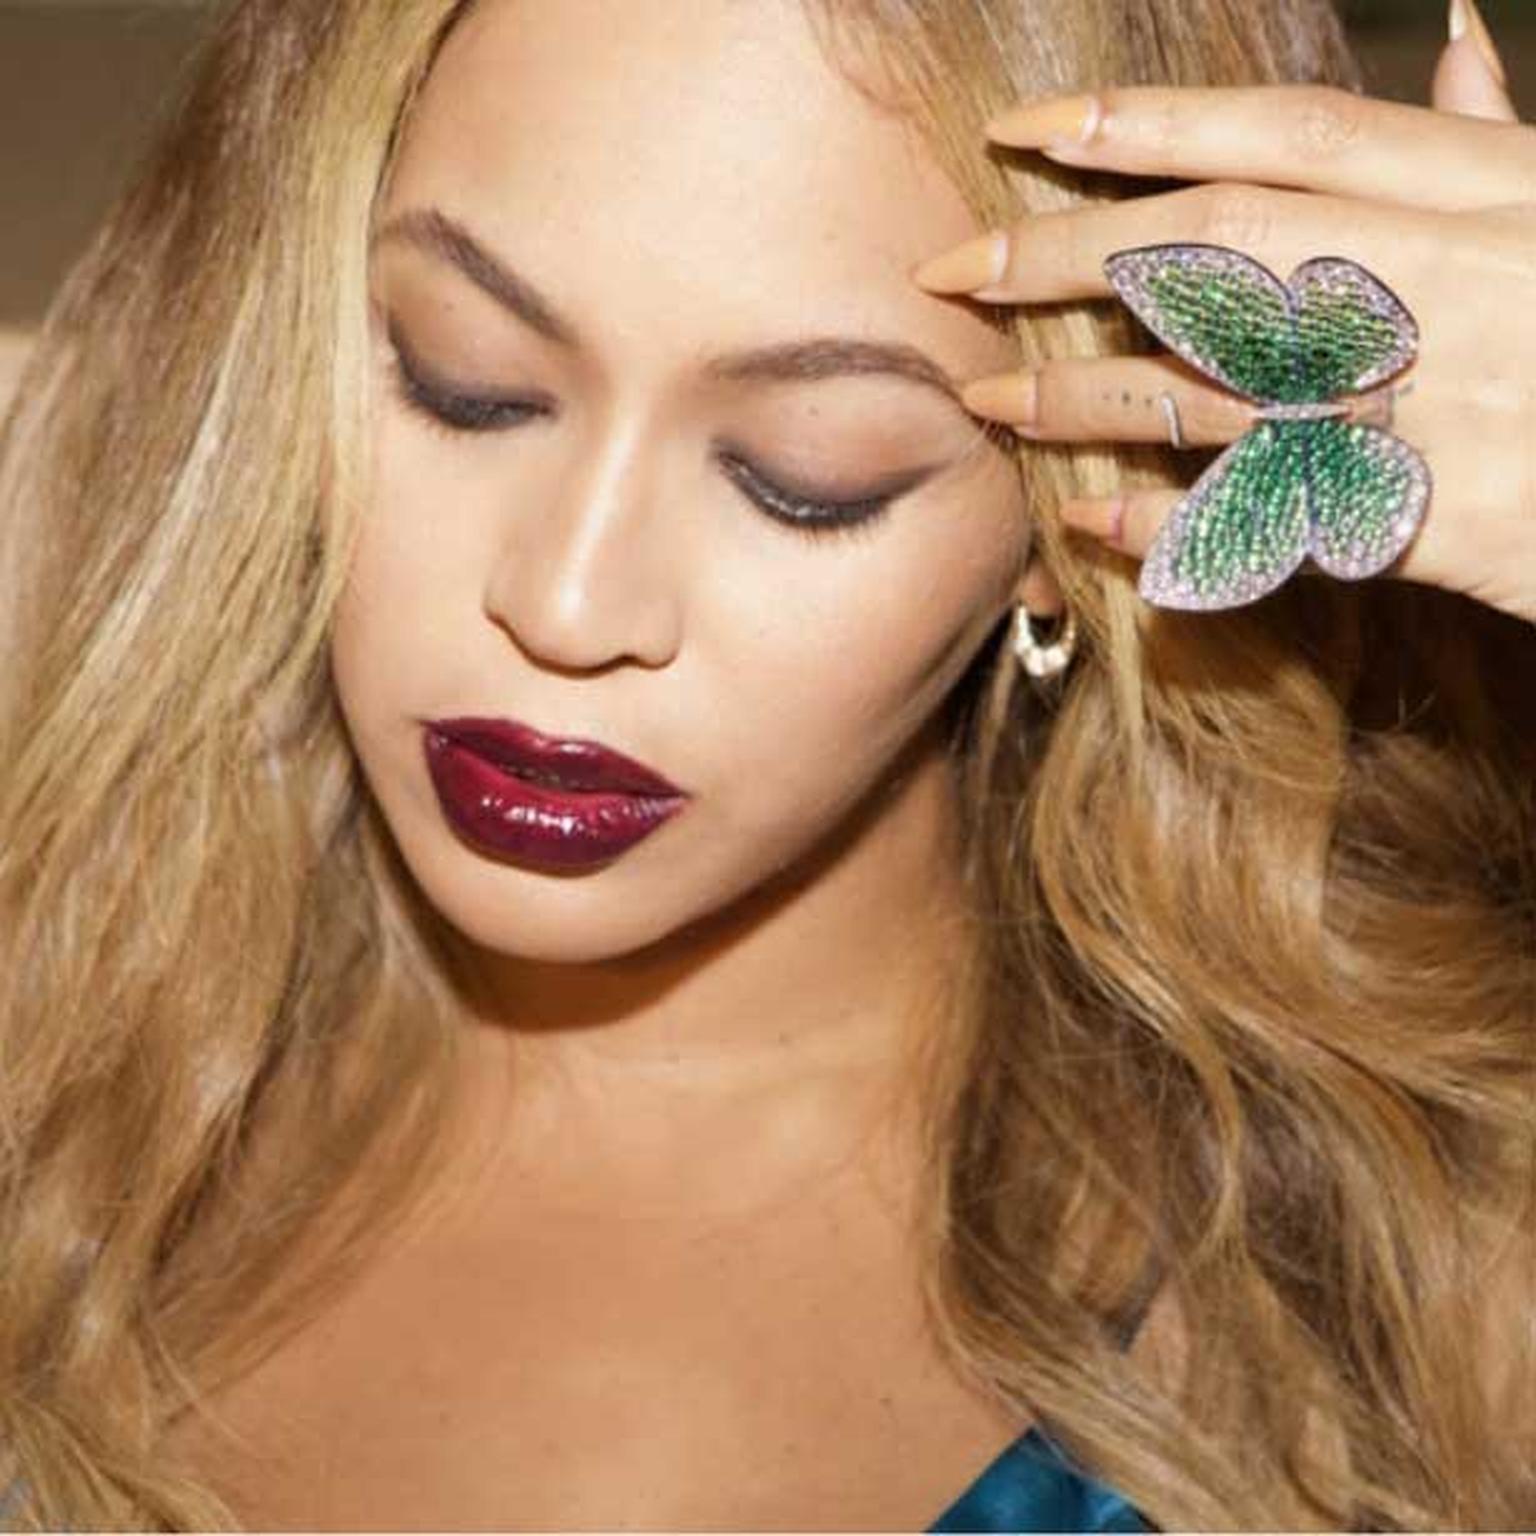 Beyonce wearing Papillon ring by Glenn Spiro in photo taken by Jay Z